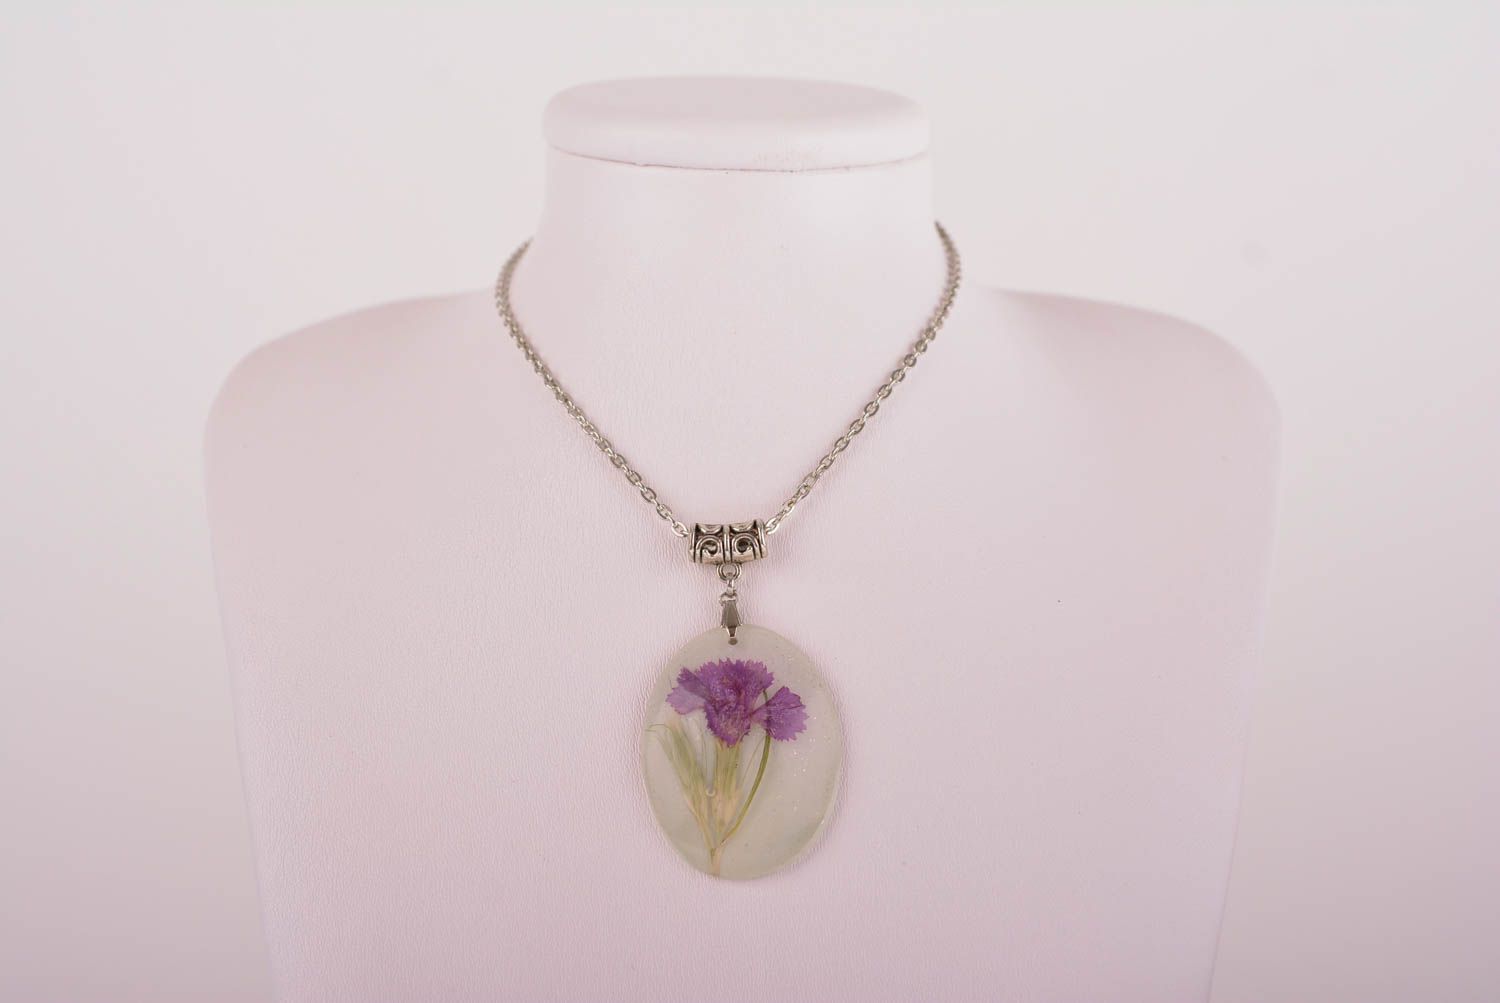 Stylish handmade neck pendant with real flowers unusual epoxy pendant gift ideas photo 5